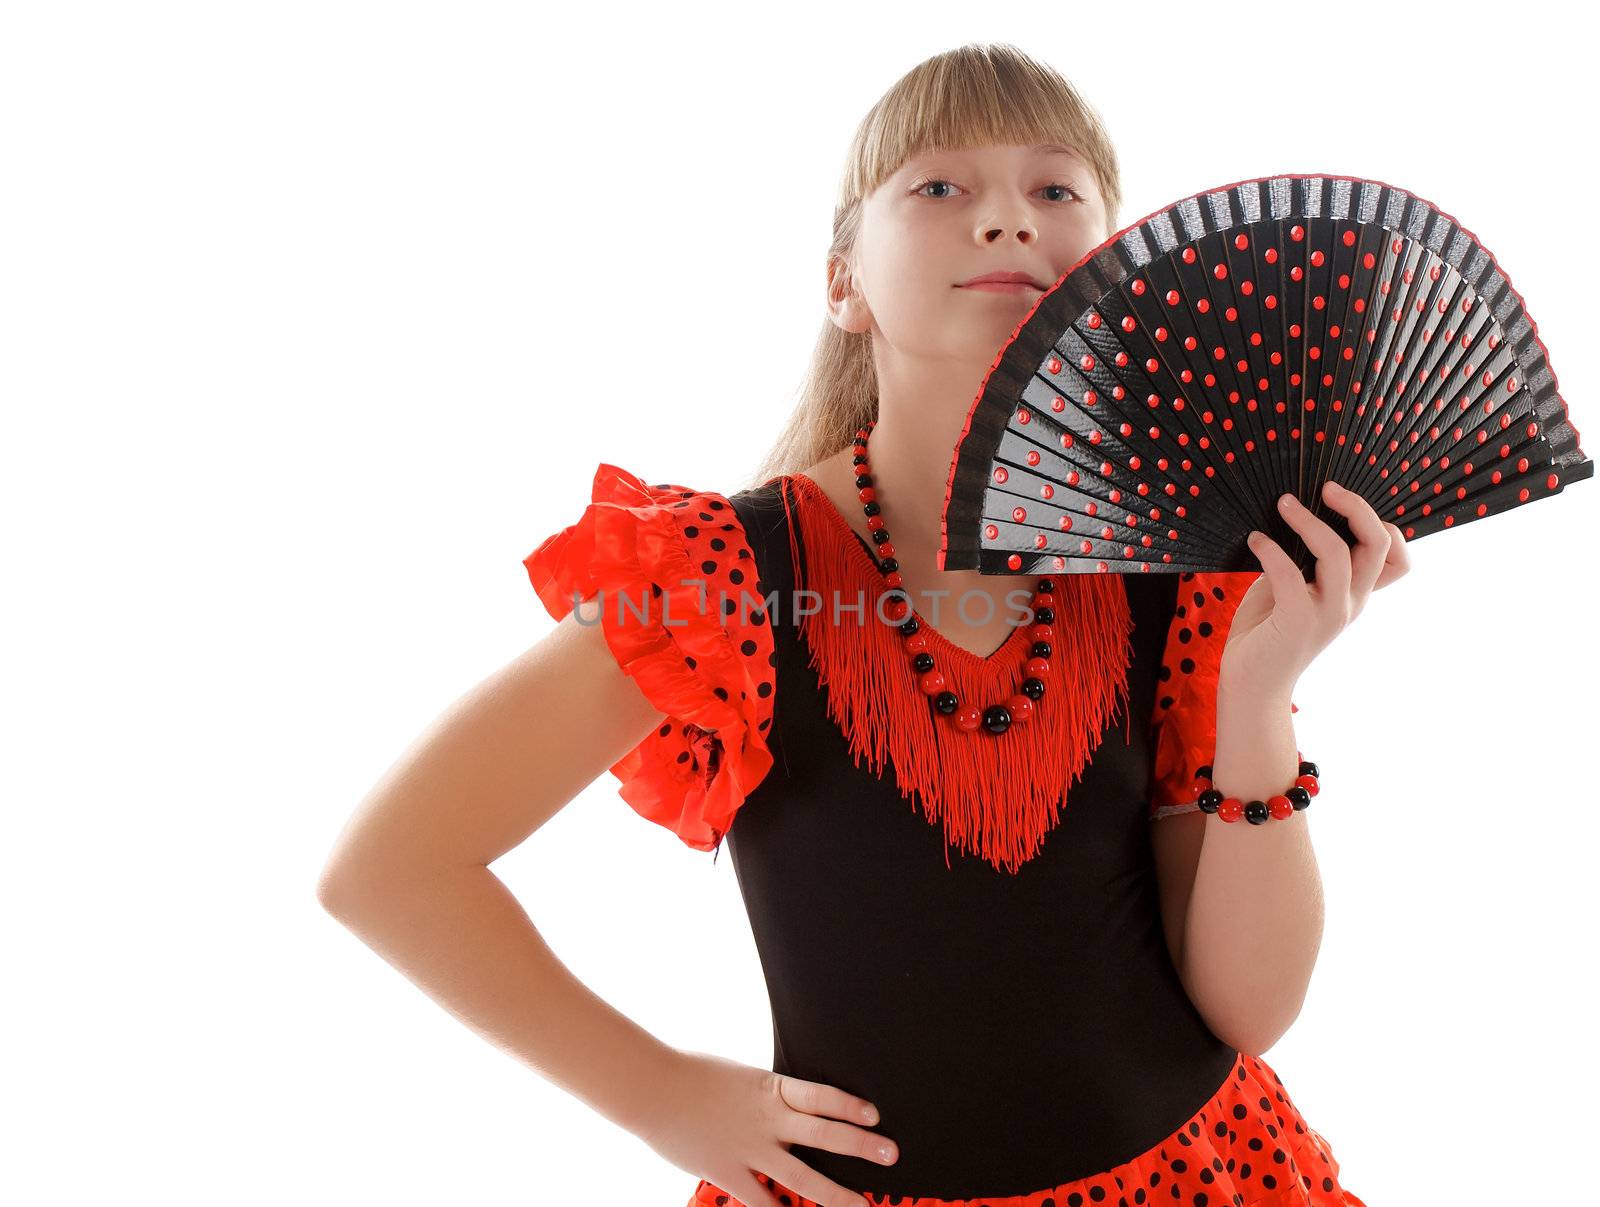 Flamenco Girl by zhekos